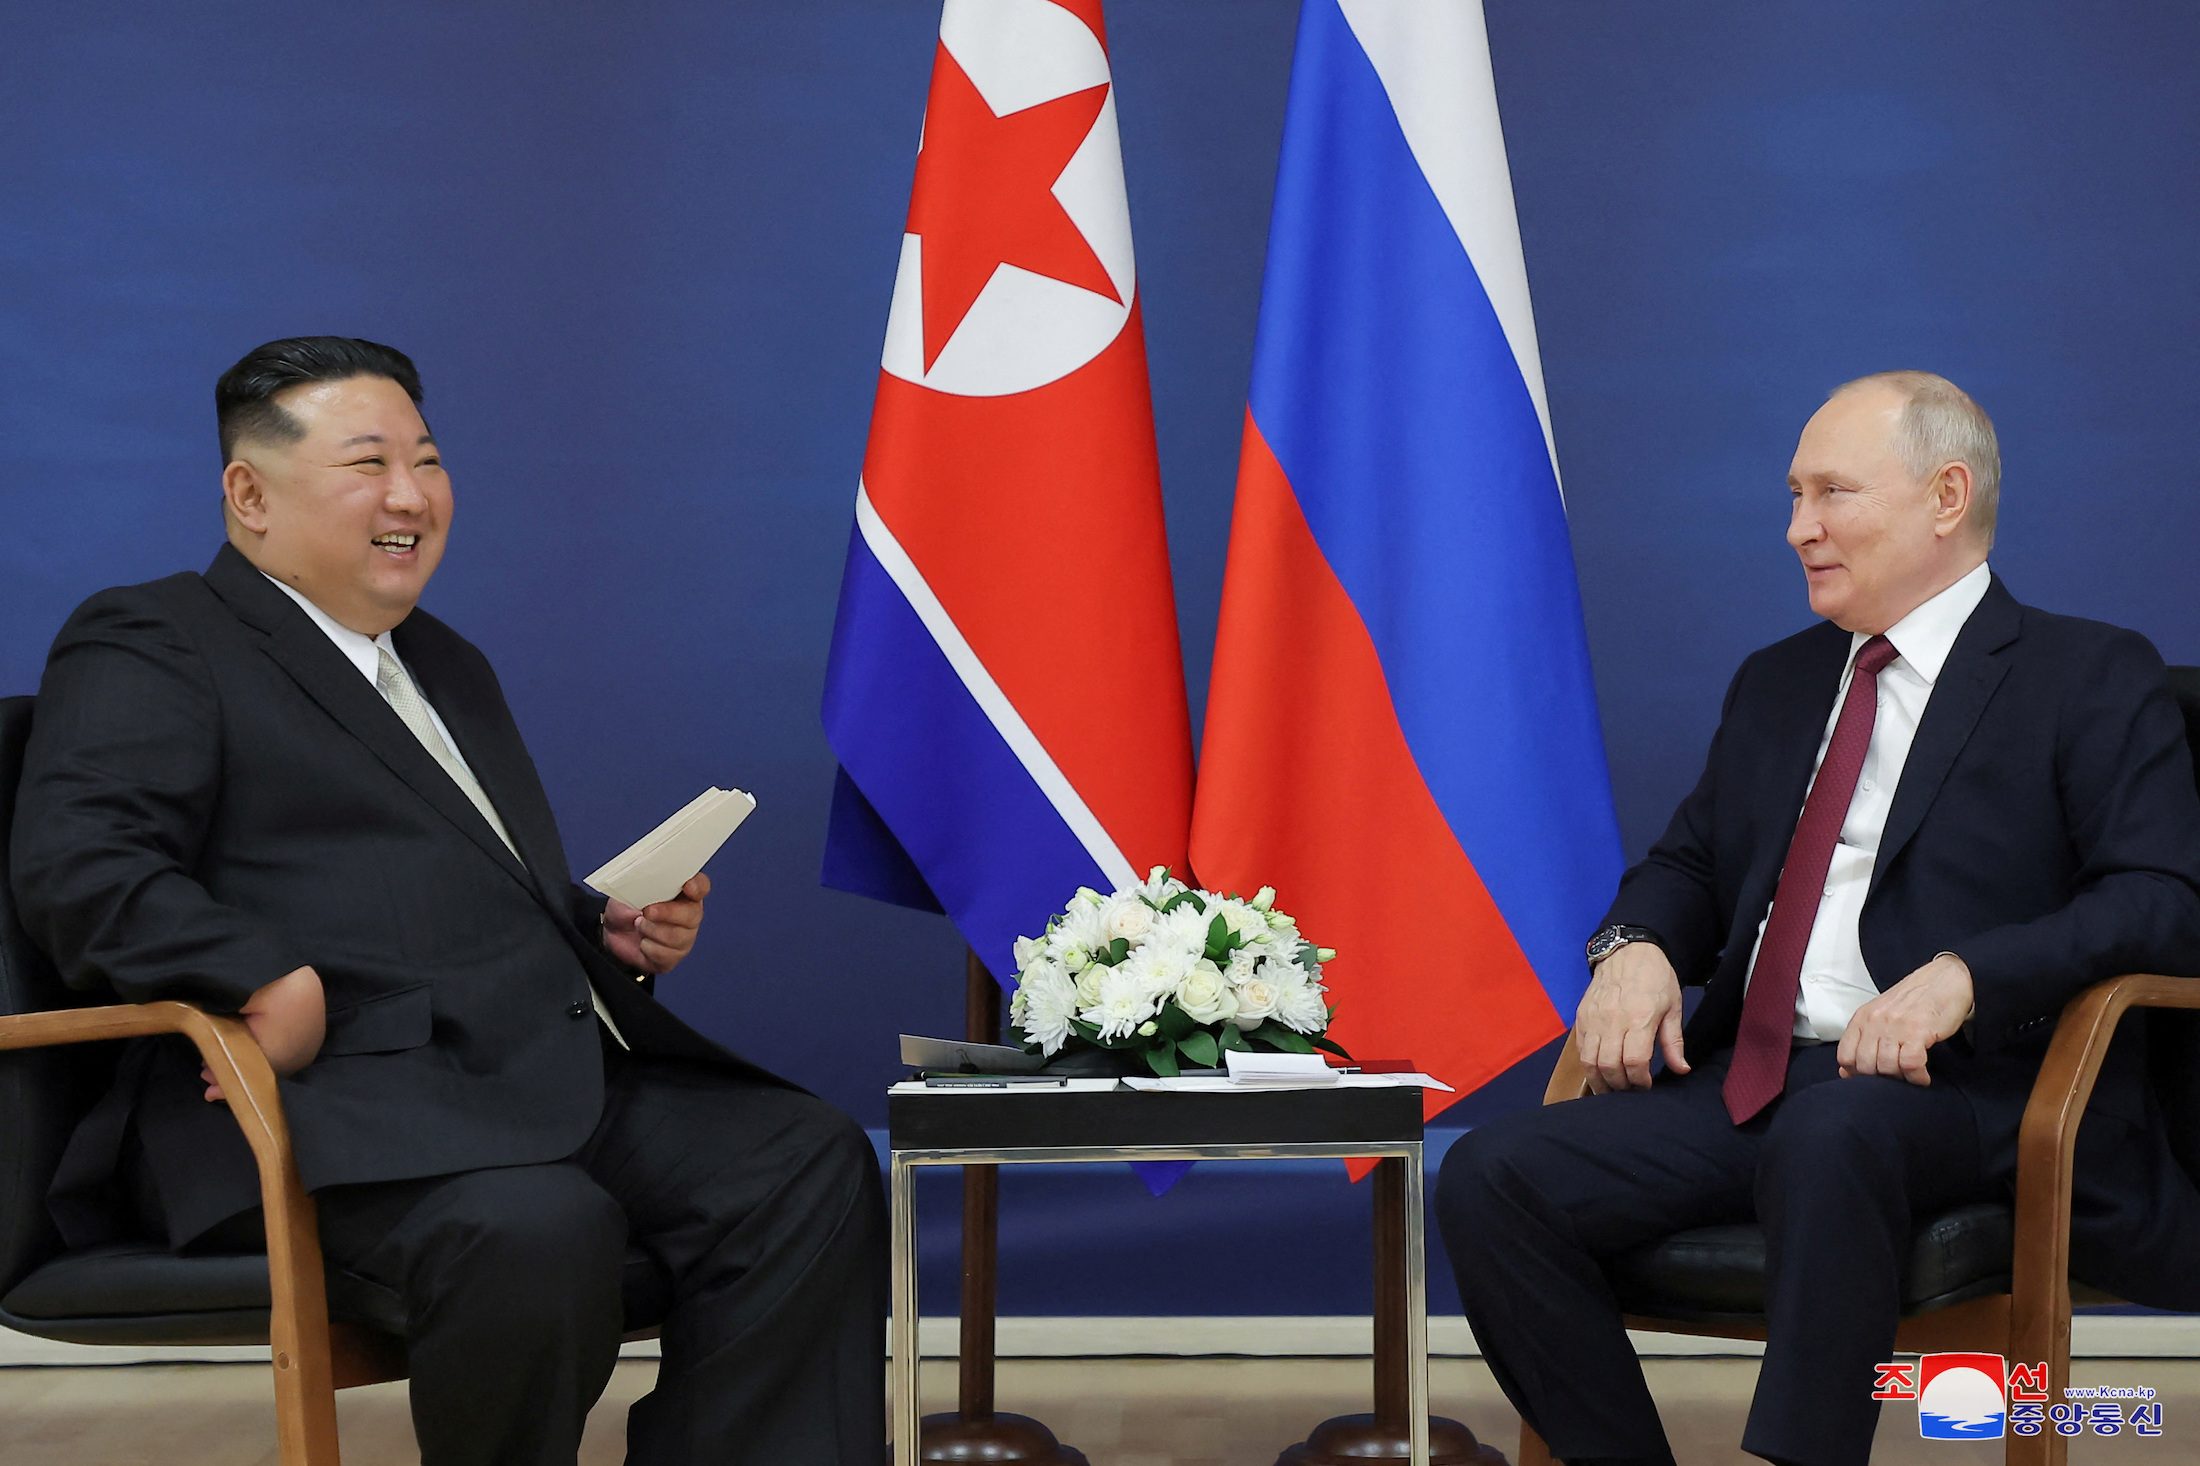 Putin and North Korea’s Kim discuss military matters, Ukraine war and satellites